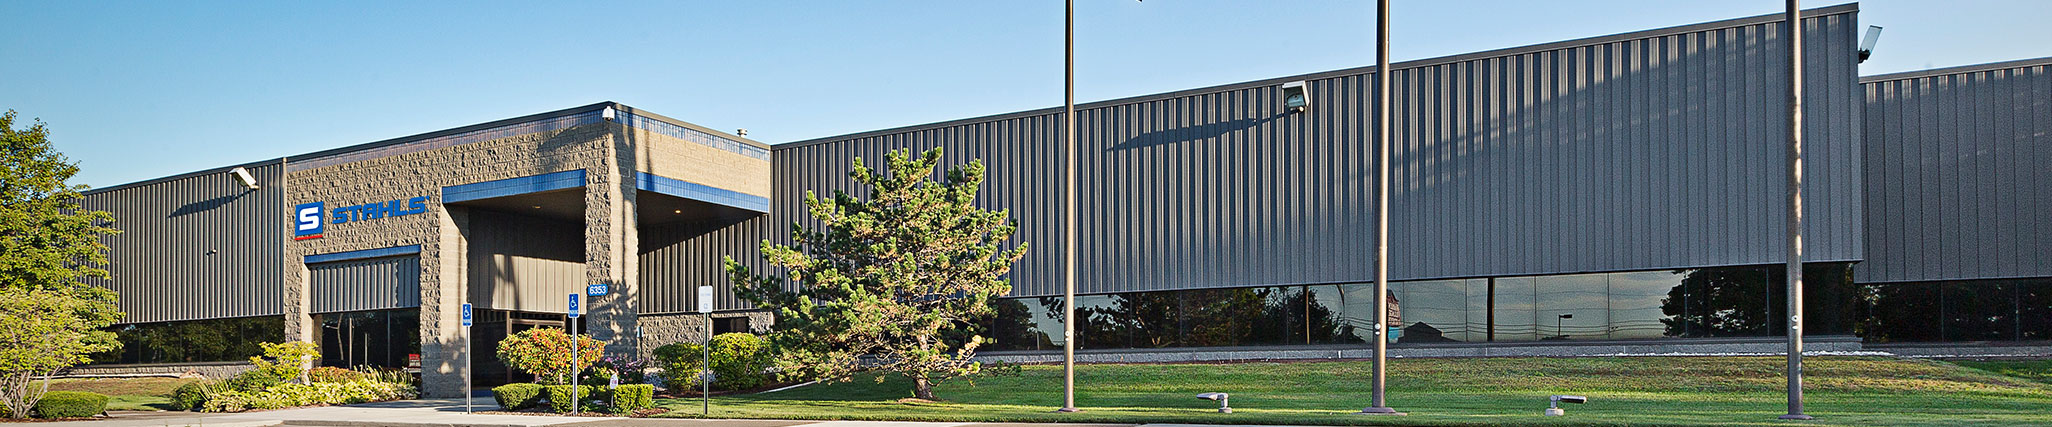 GroupeStahl Headquarters